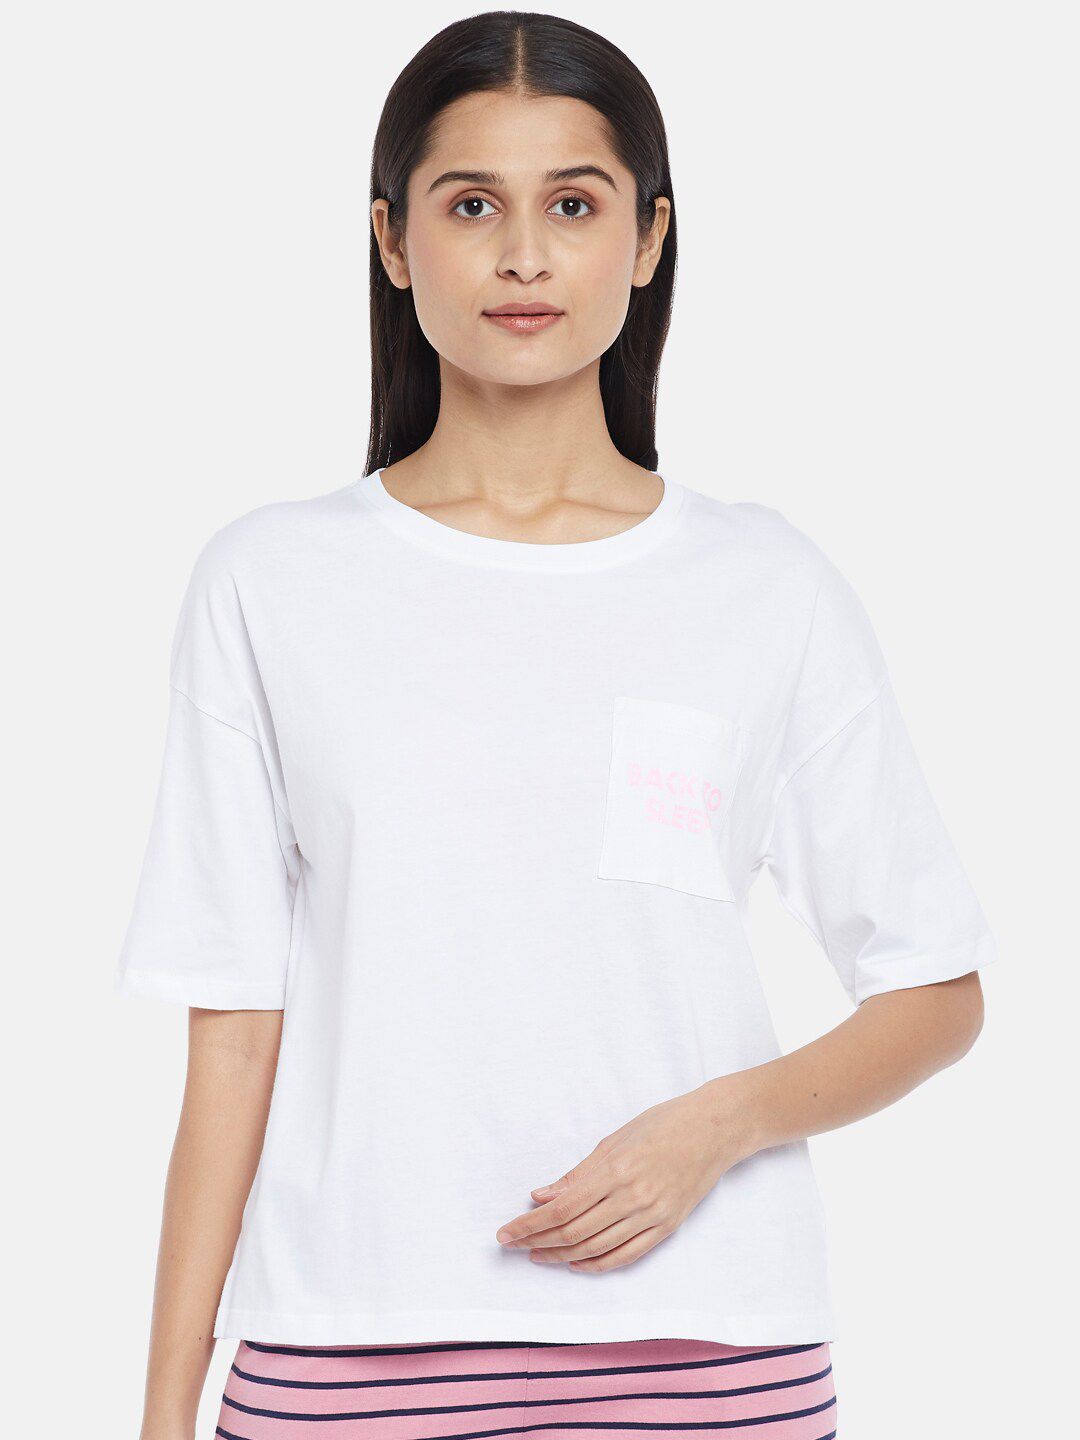 Dreamz by Pantaloons Women White Print Cotton Lounge tshirt Price in India